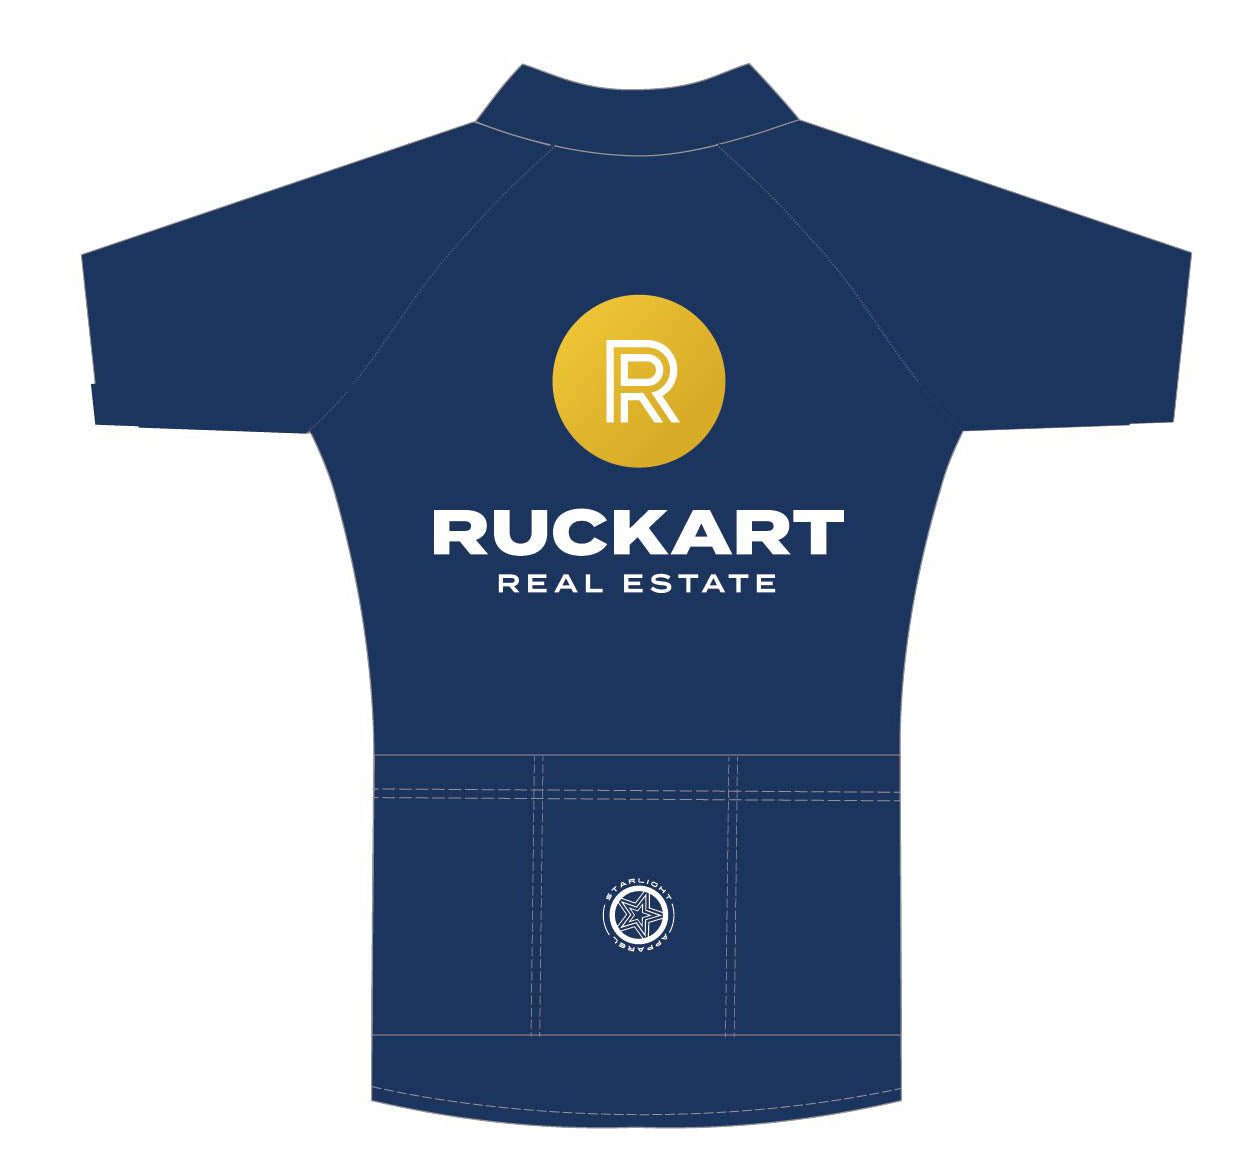 Ruckart Real Estate Pro+ Club Jersey